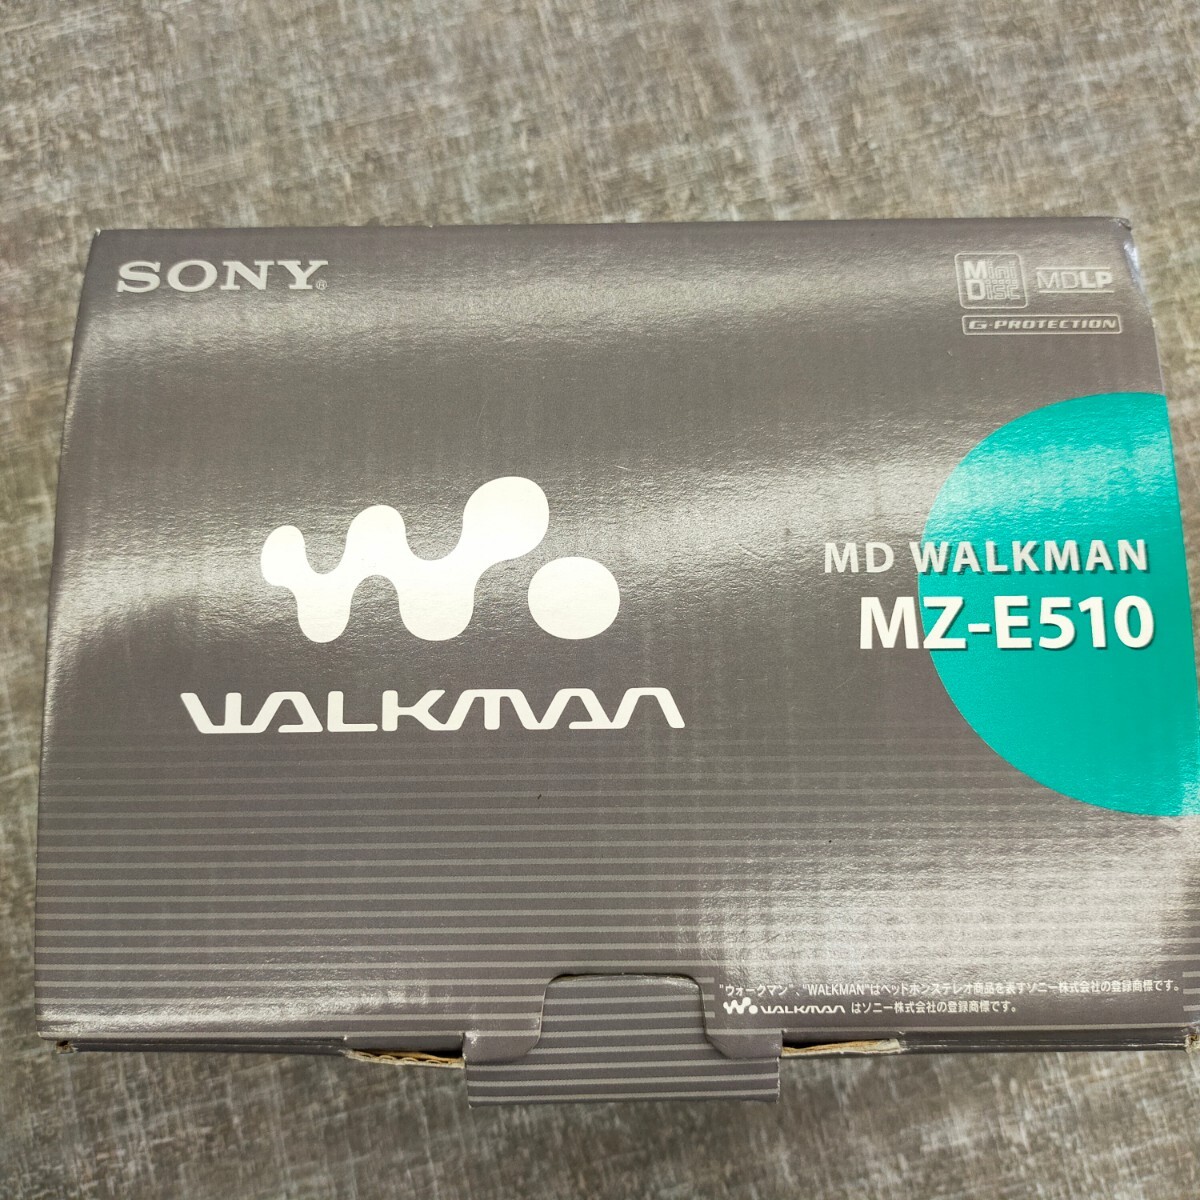 su1436 beautiful goods Walkman SONY MZ-E510 portable MD player WALKMAN Sony earphone remote control charge stand owner manual original box 